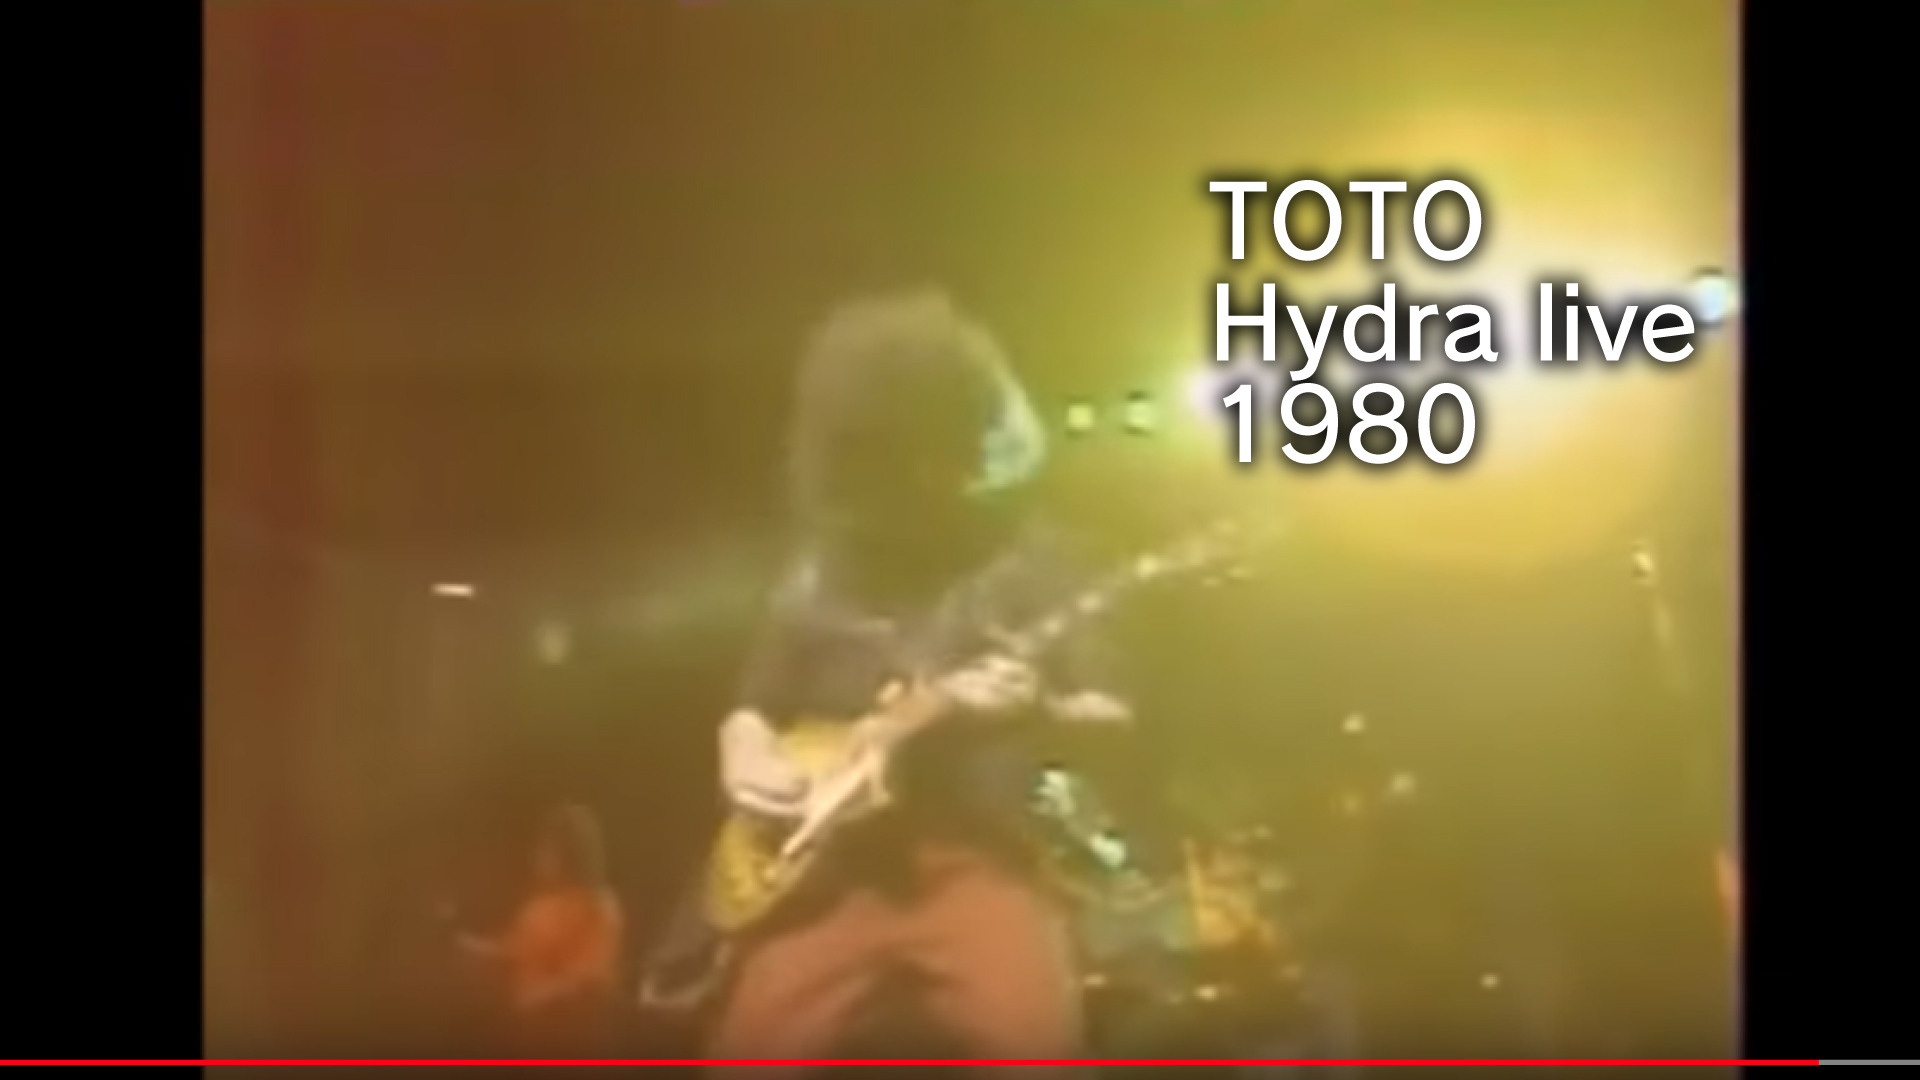 TOTO Hydra live 1980